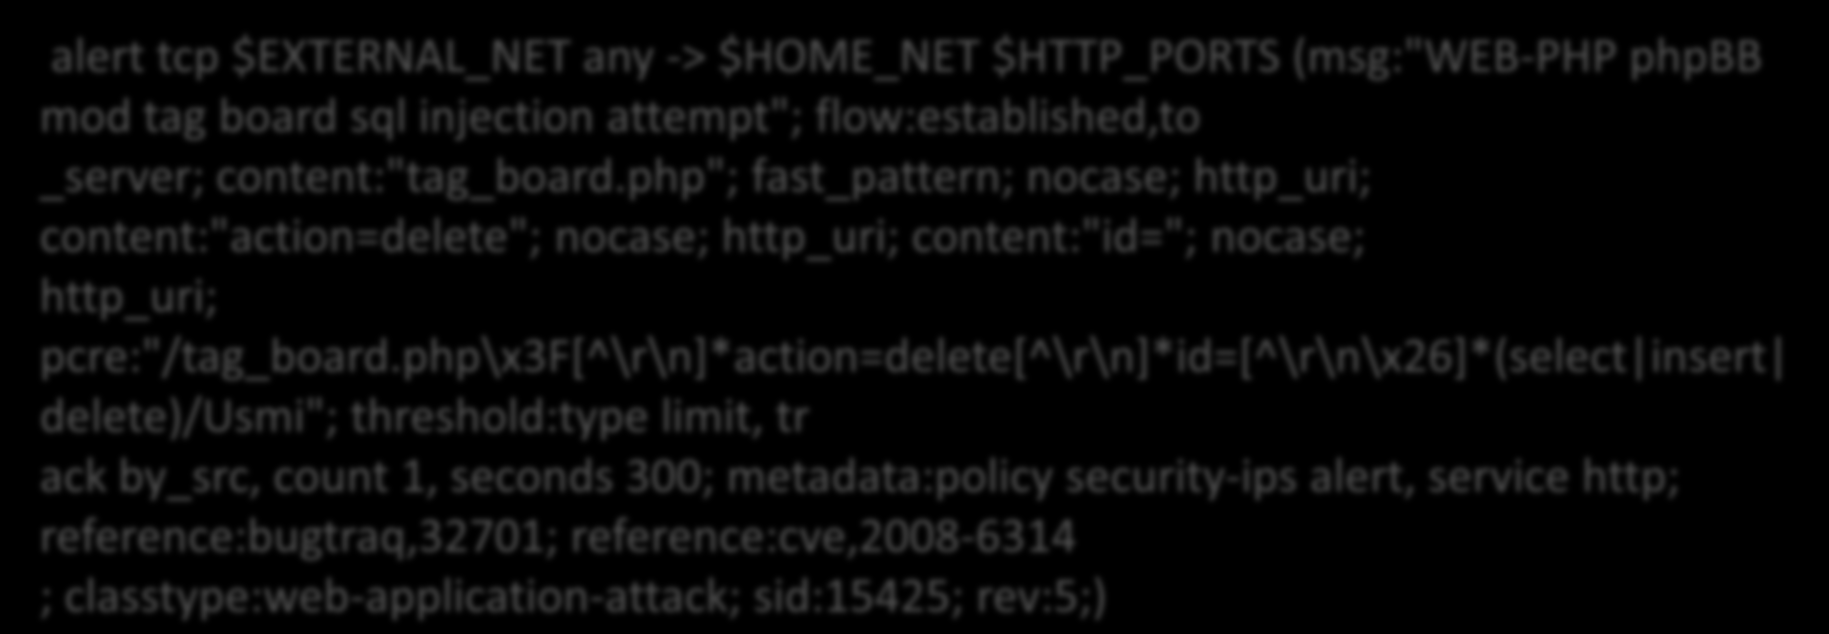 Örnek IPS İmzası-I alert tcp $EXTERNAL_NET any -> $HOME_NET $HTTP_PORTS (msg:"web-php phpbb mod tag board sql injection attempt"; flow:established,to _server; content:"tag_board.